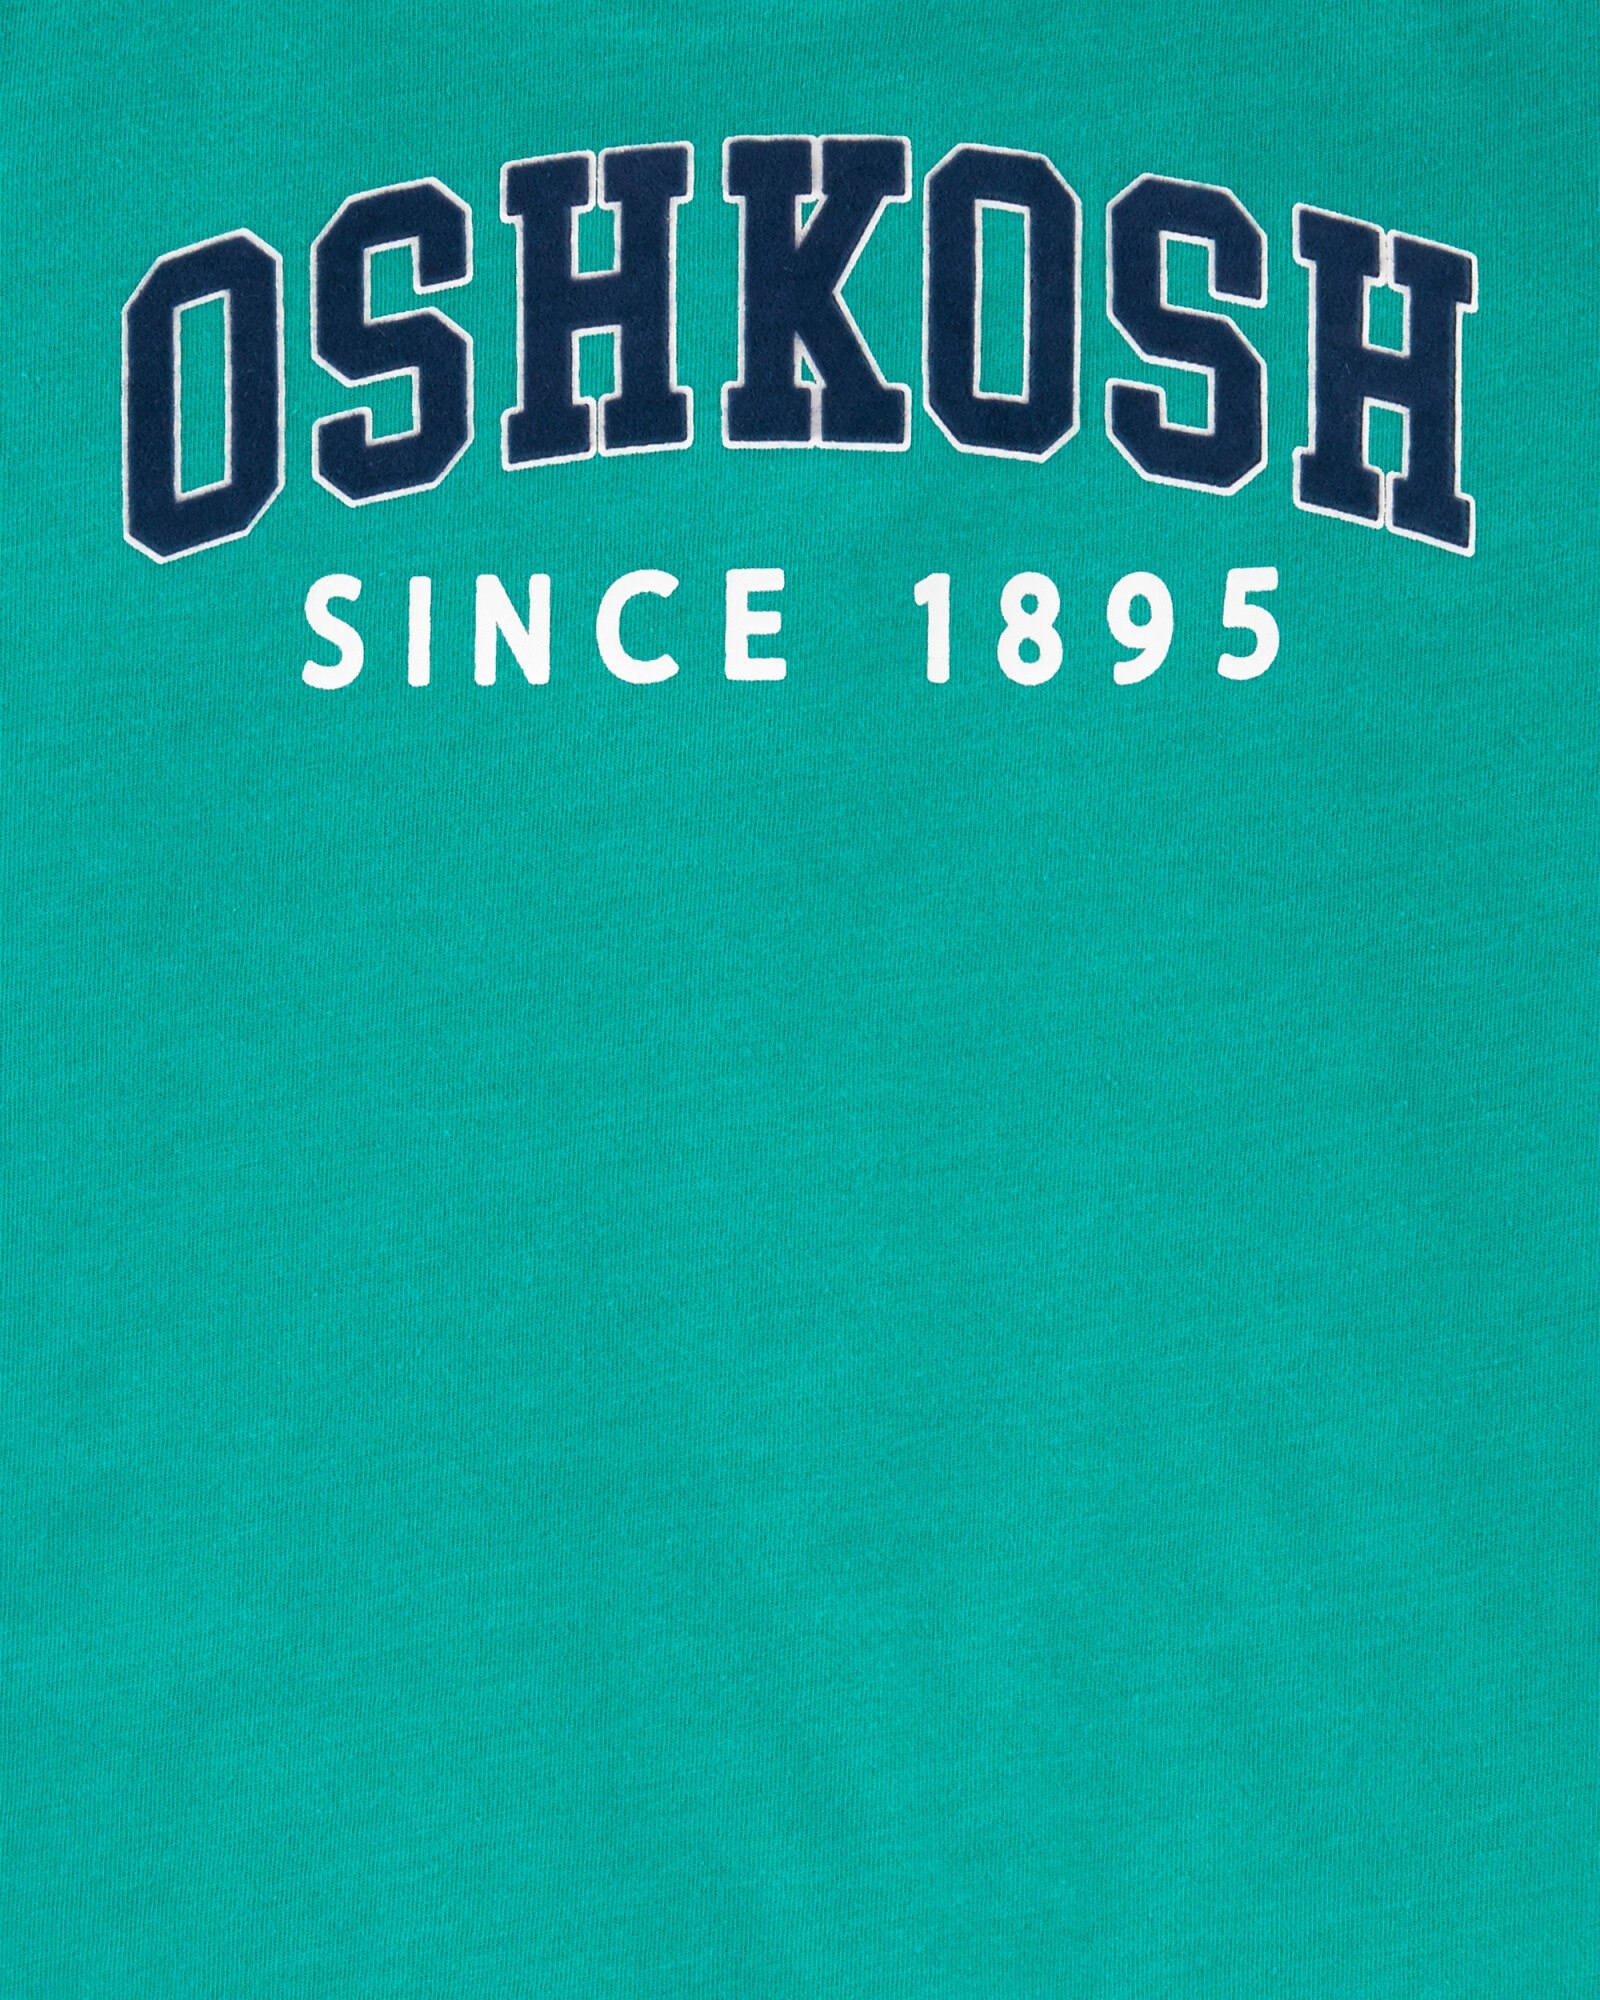 Remera Manga Corta Algodón "OshKosh Since 1895" 0